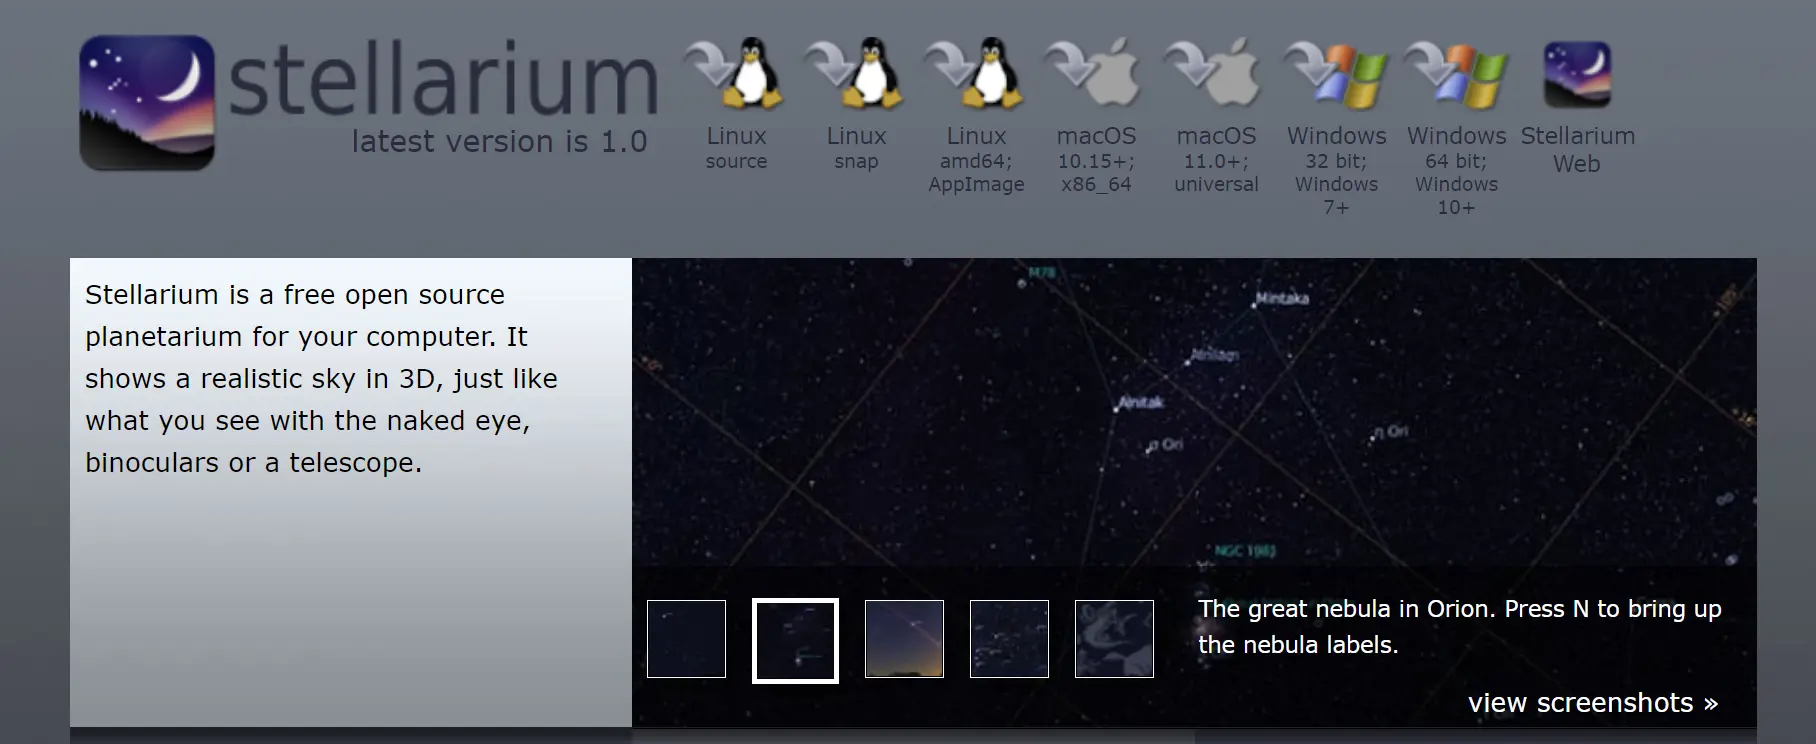 Start page of Stellarium WEB